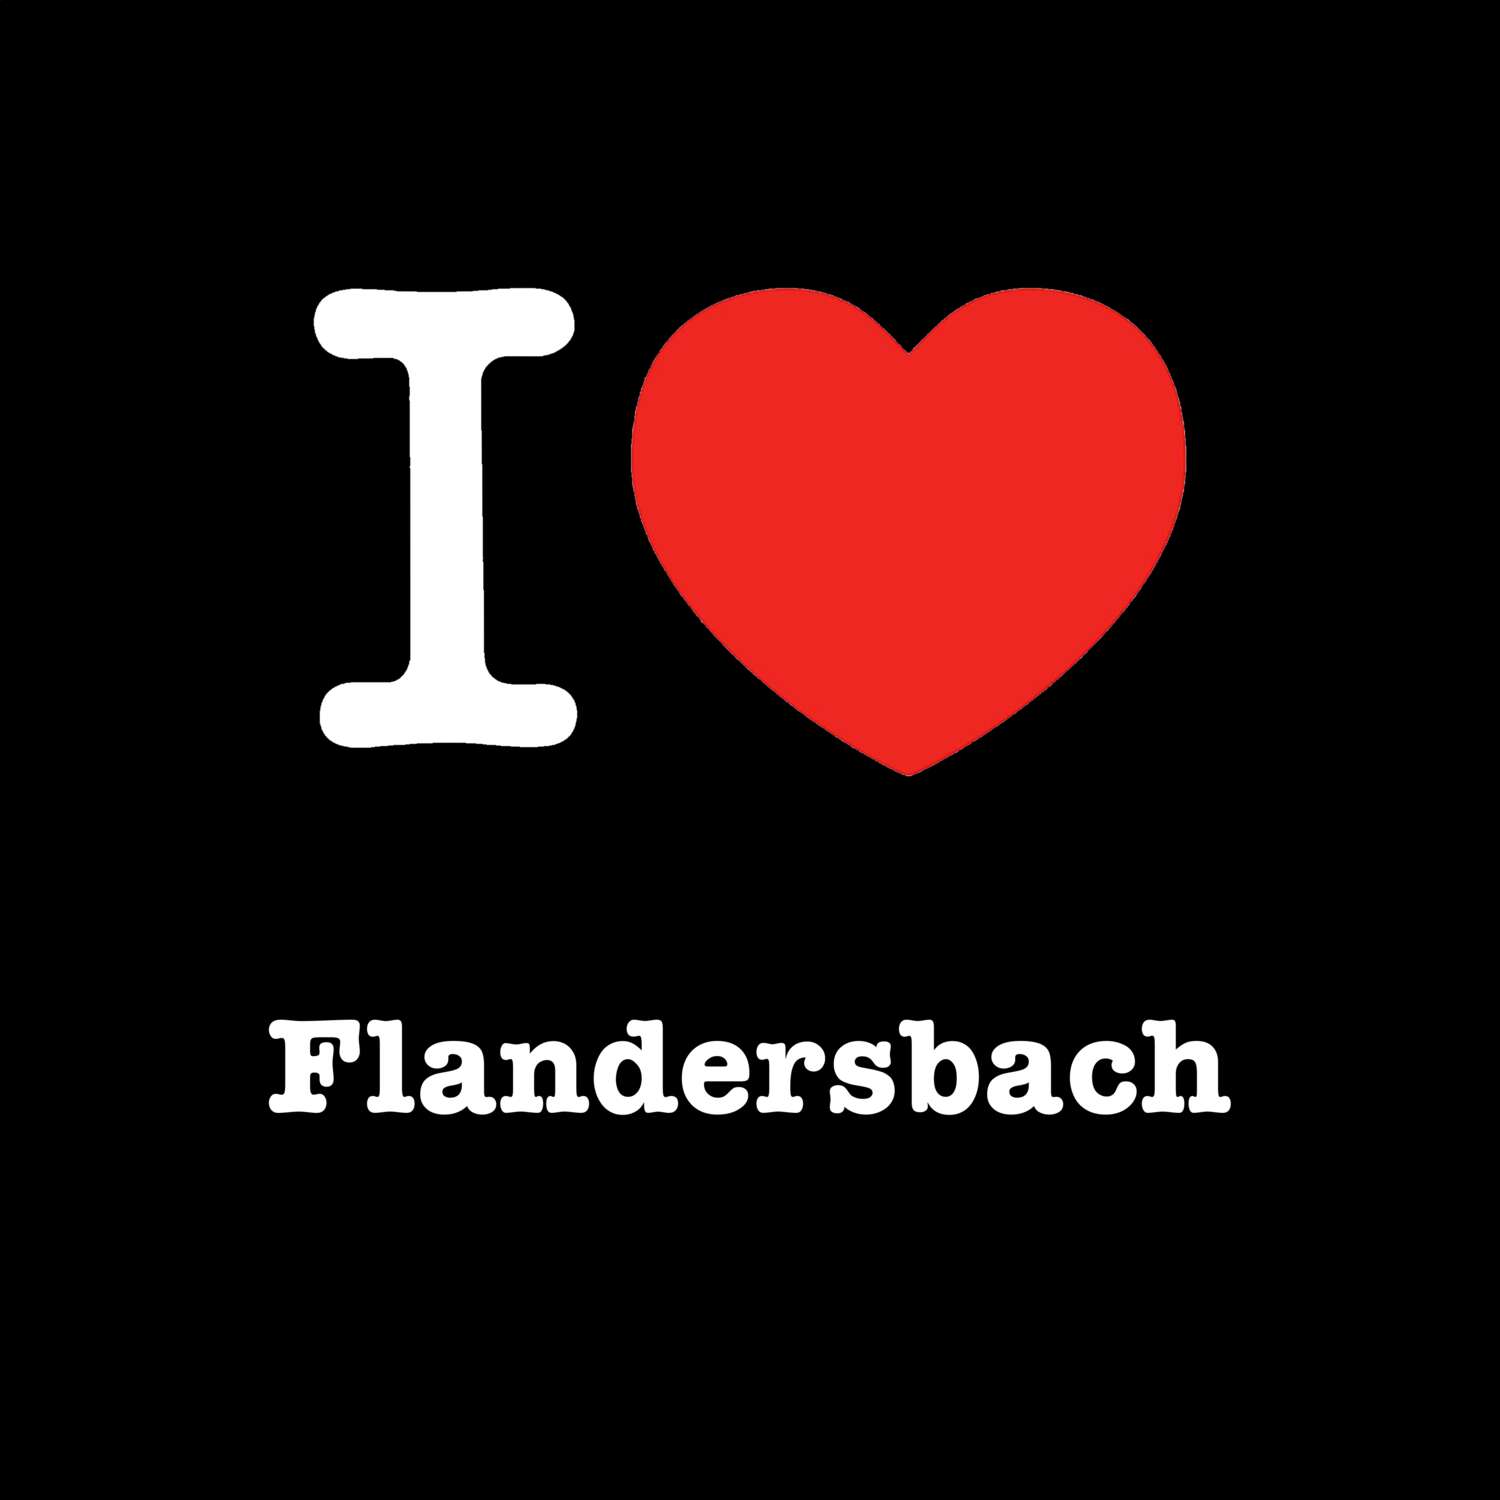 Flandersbach T-Shirt »I love«